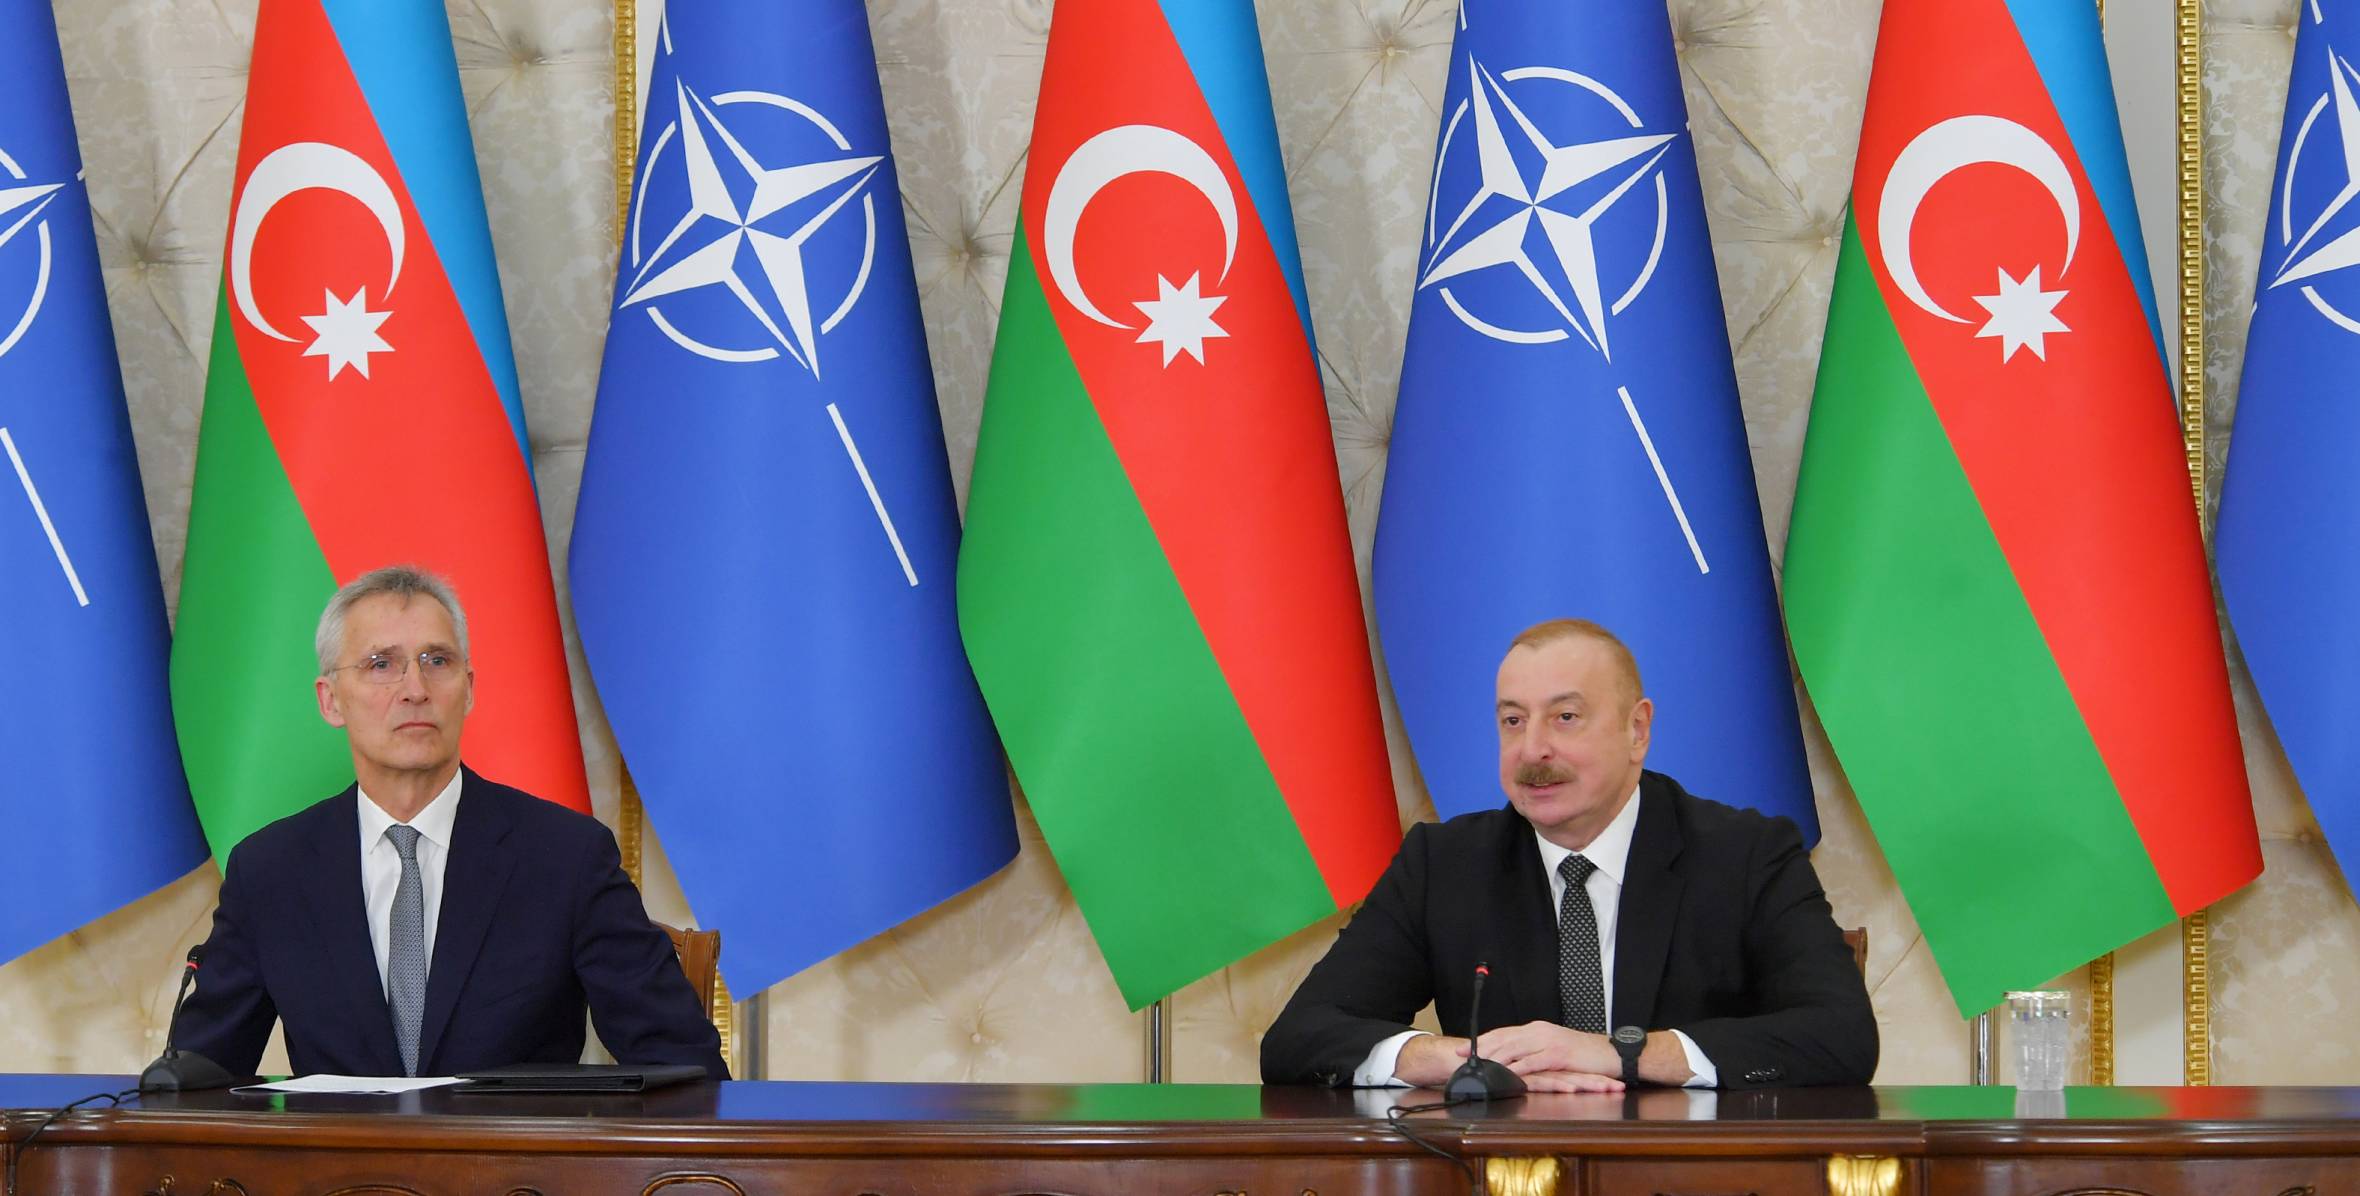 Ilham Aliyev and NATO Secretary General Jens Stoltenberg made press statements